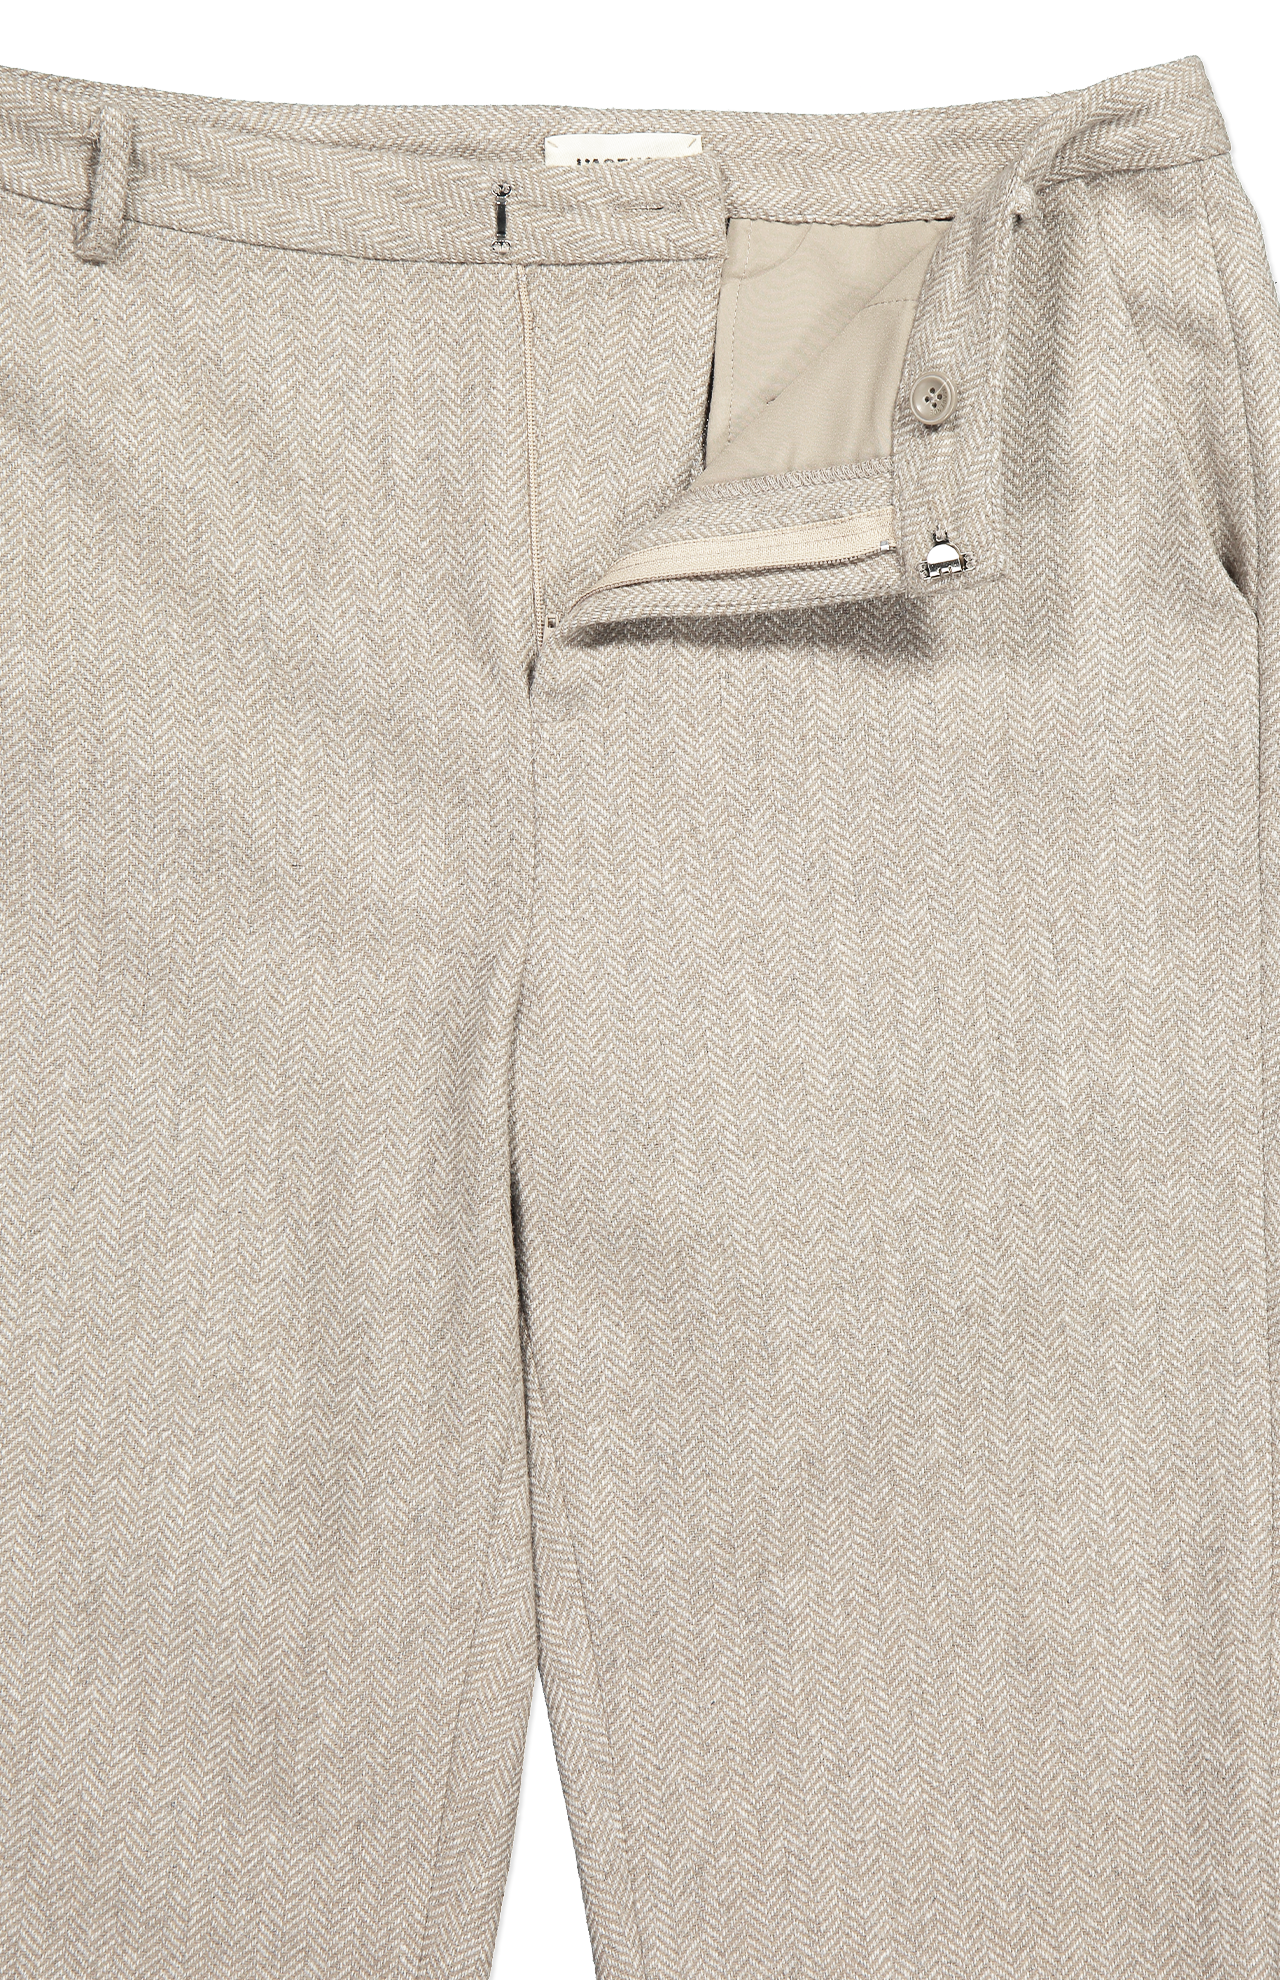 Lagence Ludivine Trouser Front Detail Image (7025423646835)